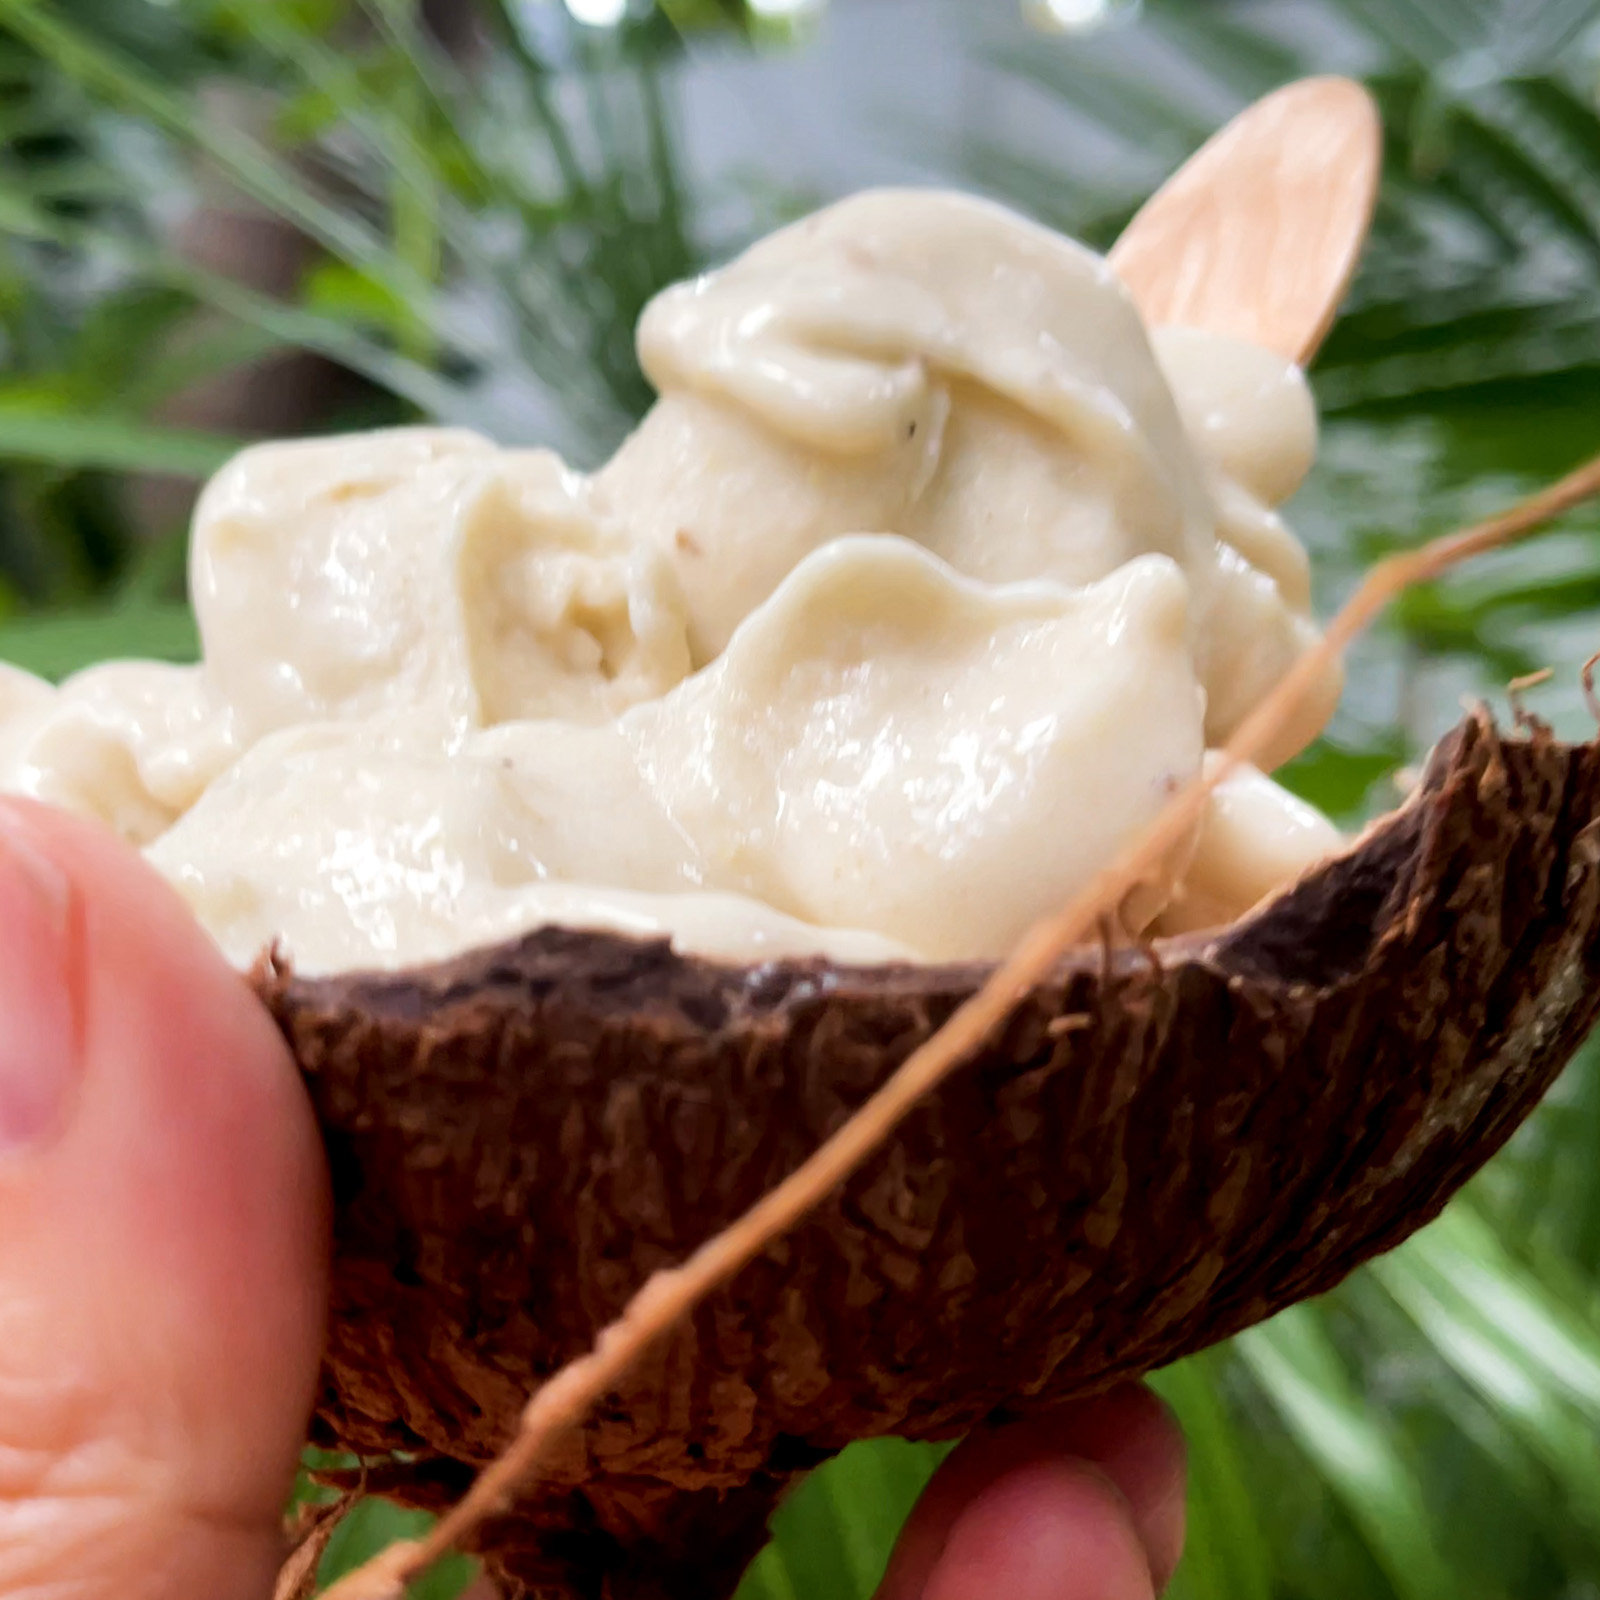 Coconut / Banana ice cream